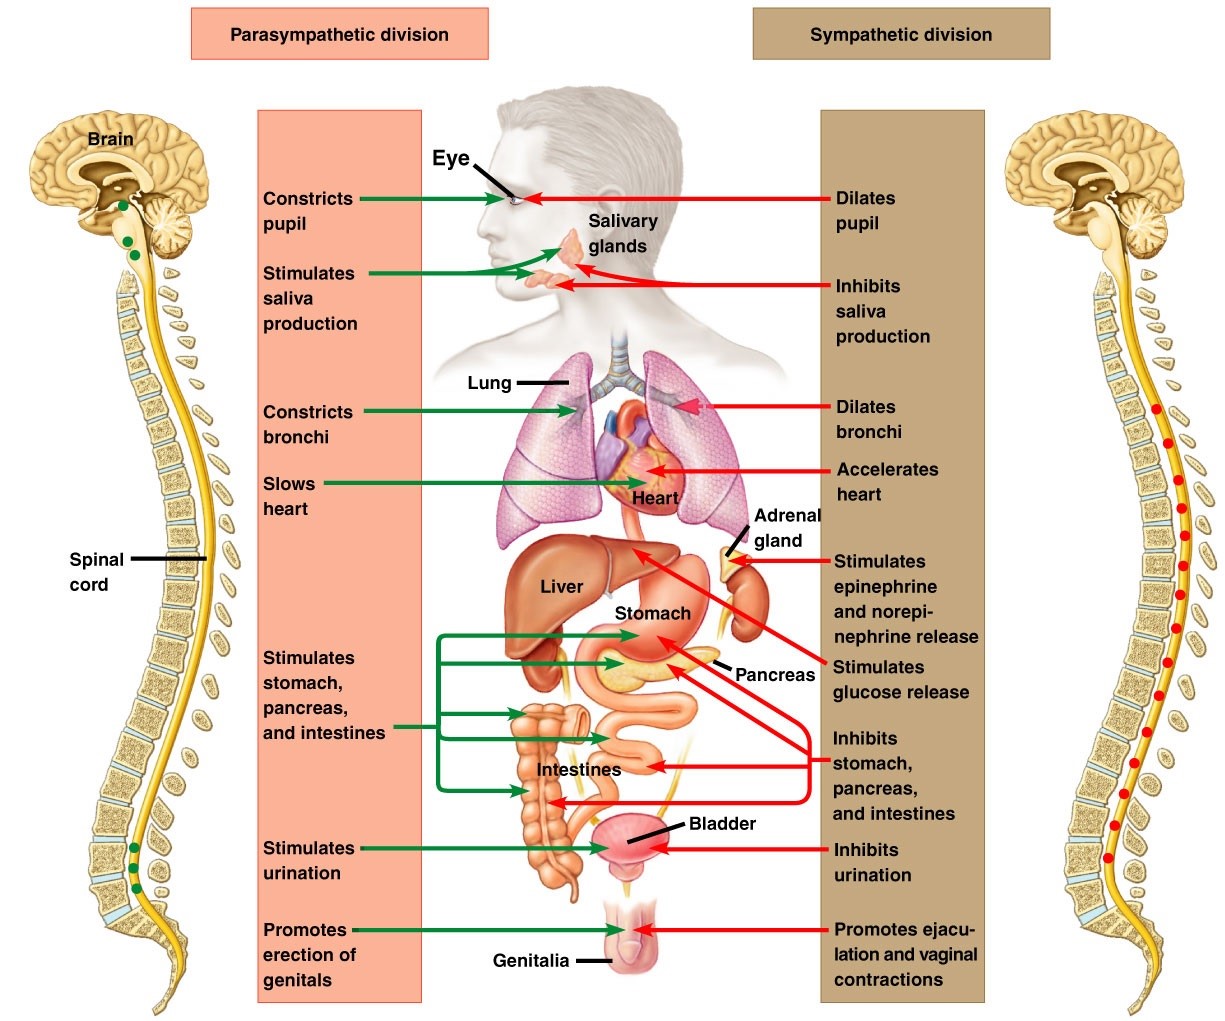 The innervation of autonomic nervous system (ANS).